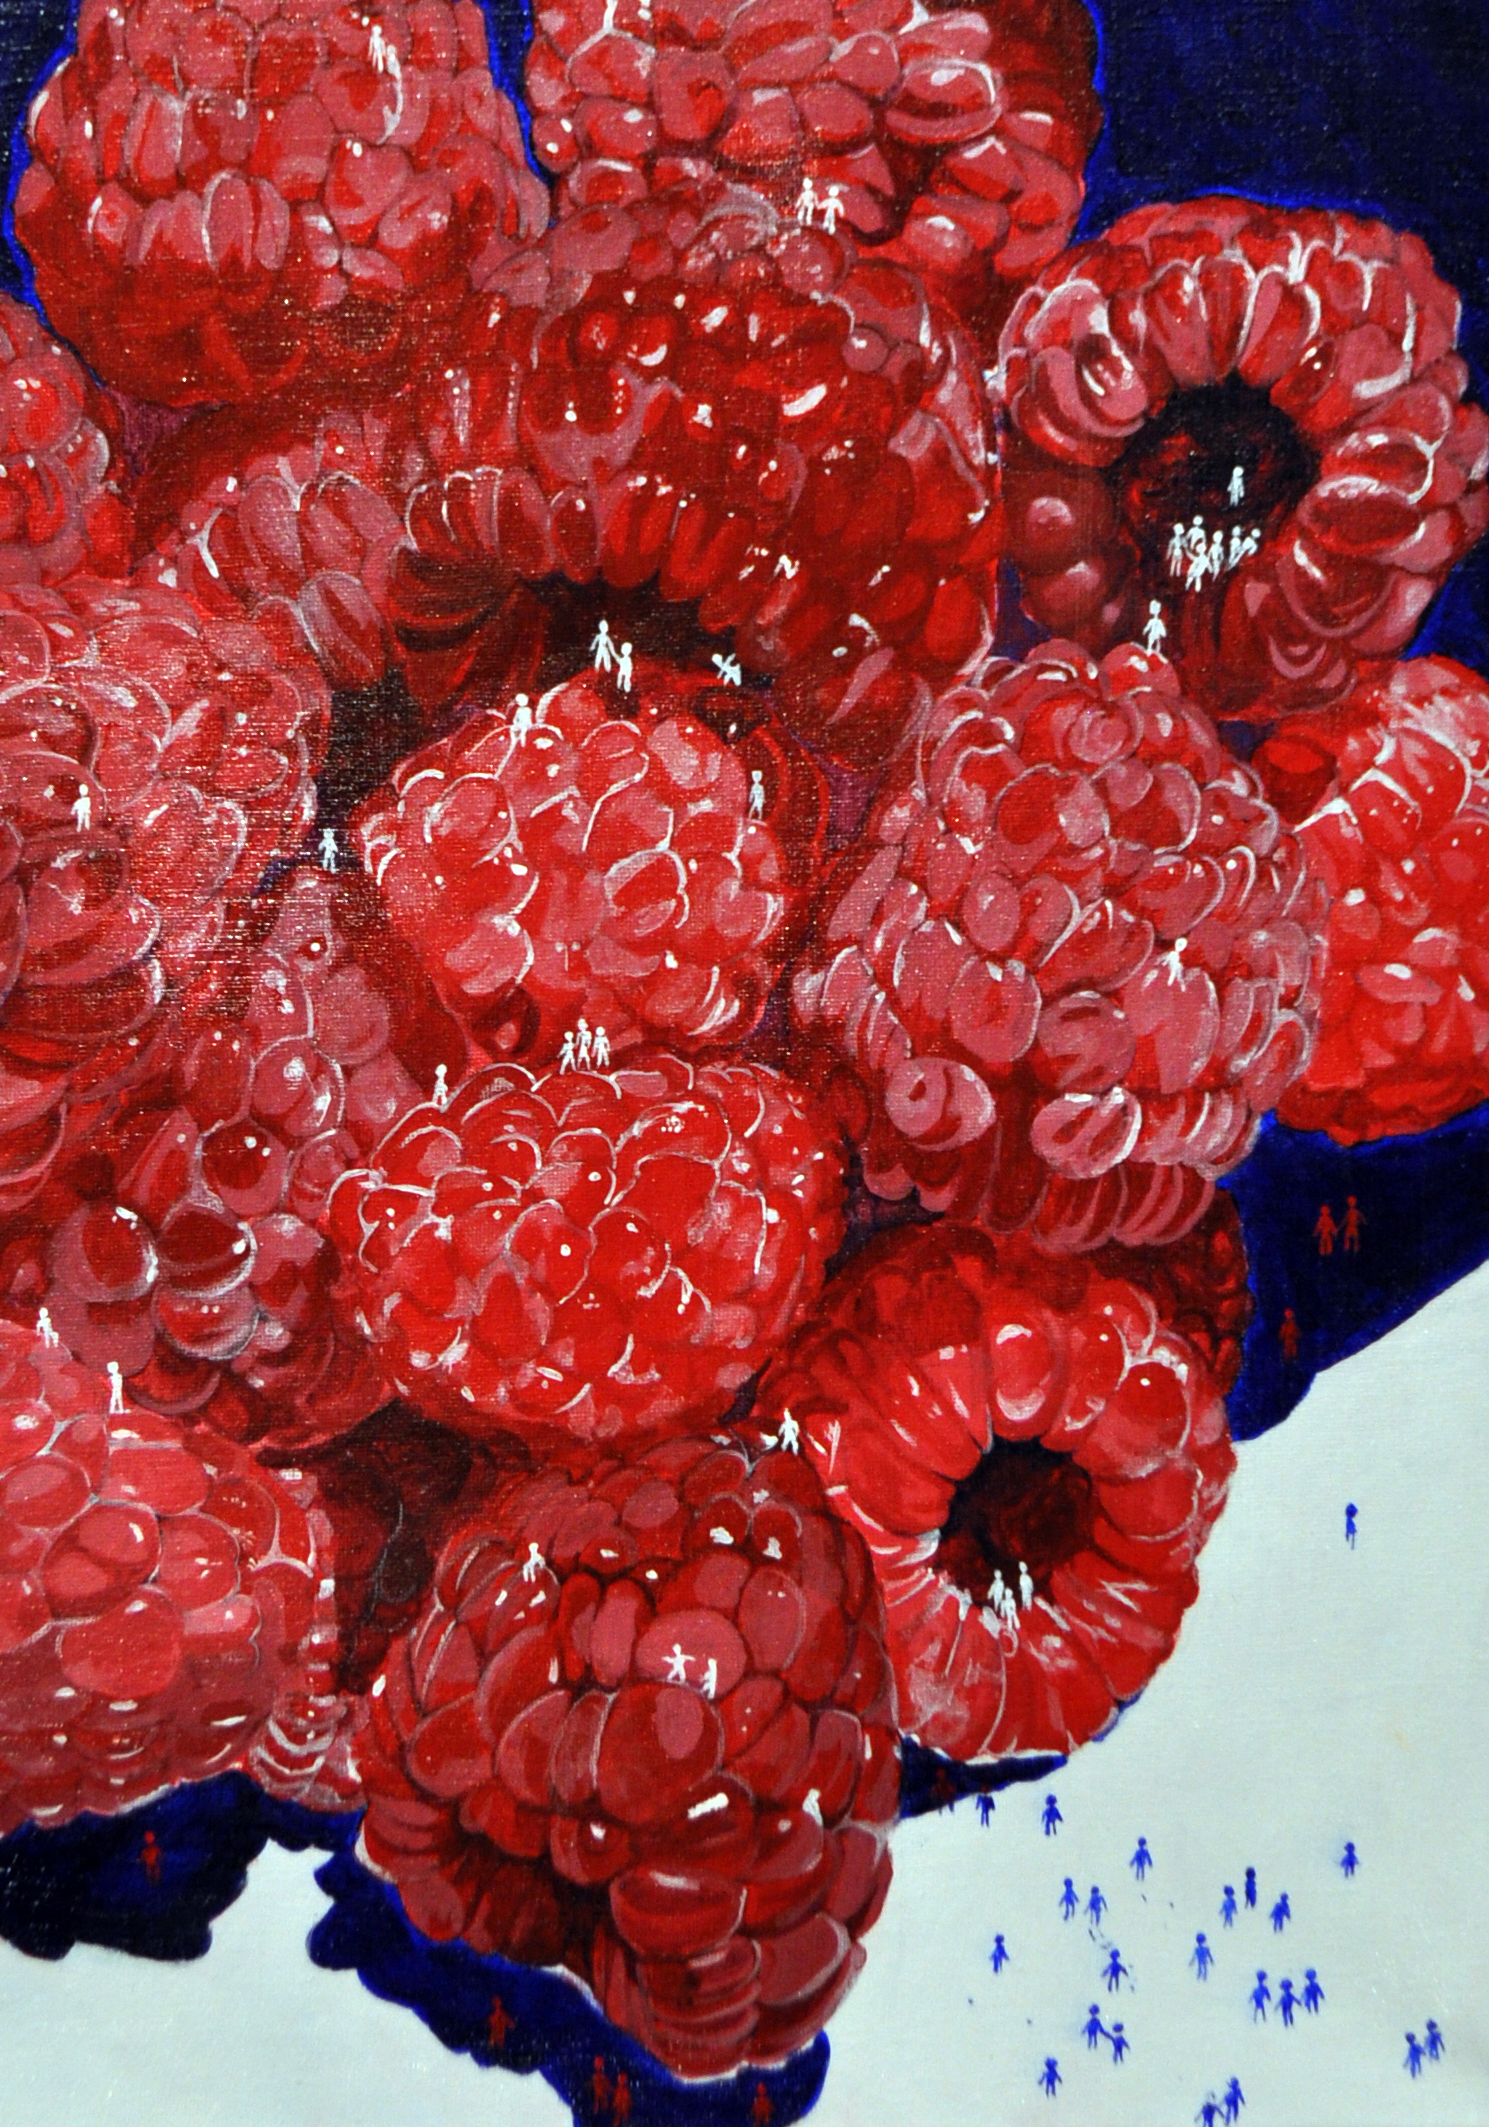 Jingming Yu, "A Bowl of Raspberries" (detail), 2019